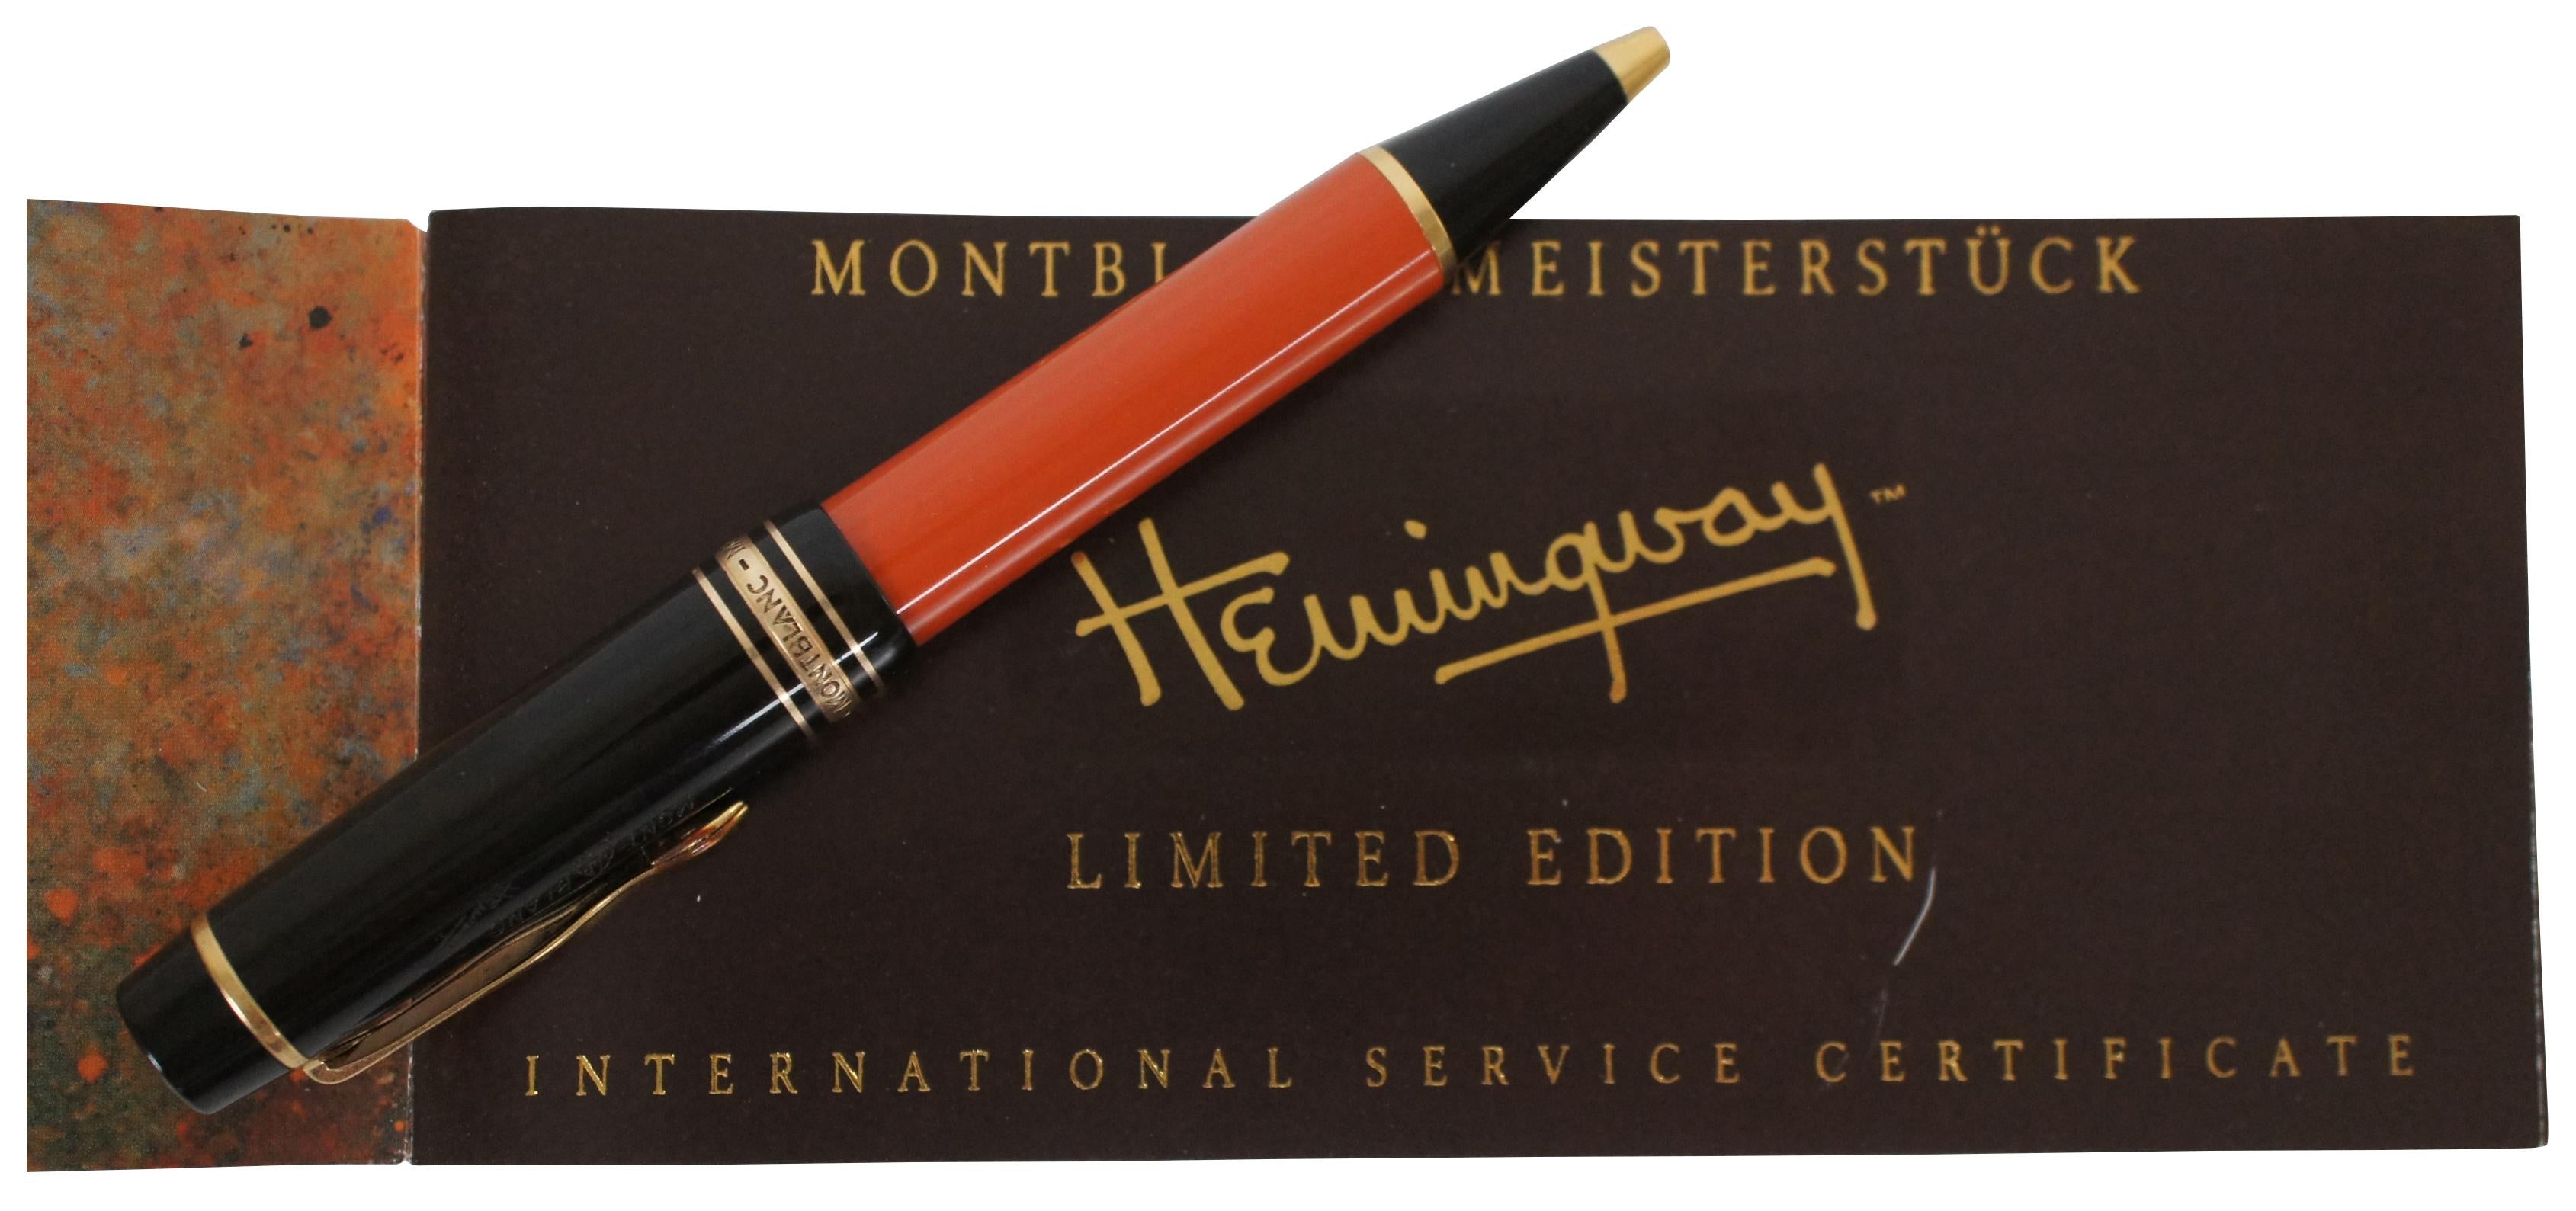 Vintage Montblanc Meisterstuck Limited Edition brown and orange Earnest Hemingway ballpoint pen.
 